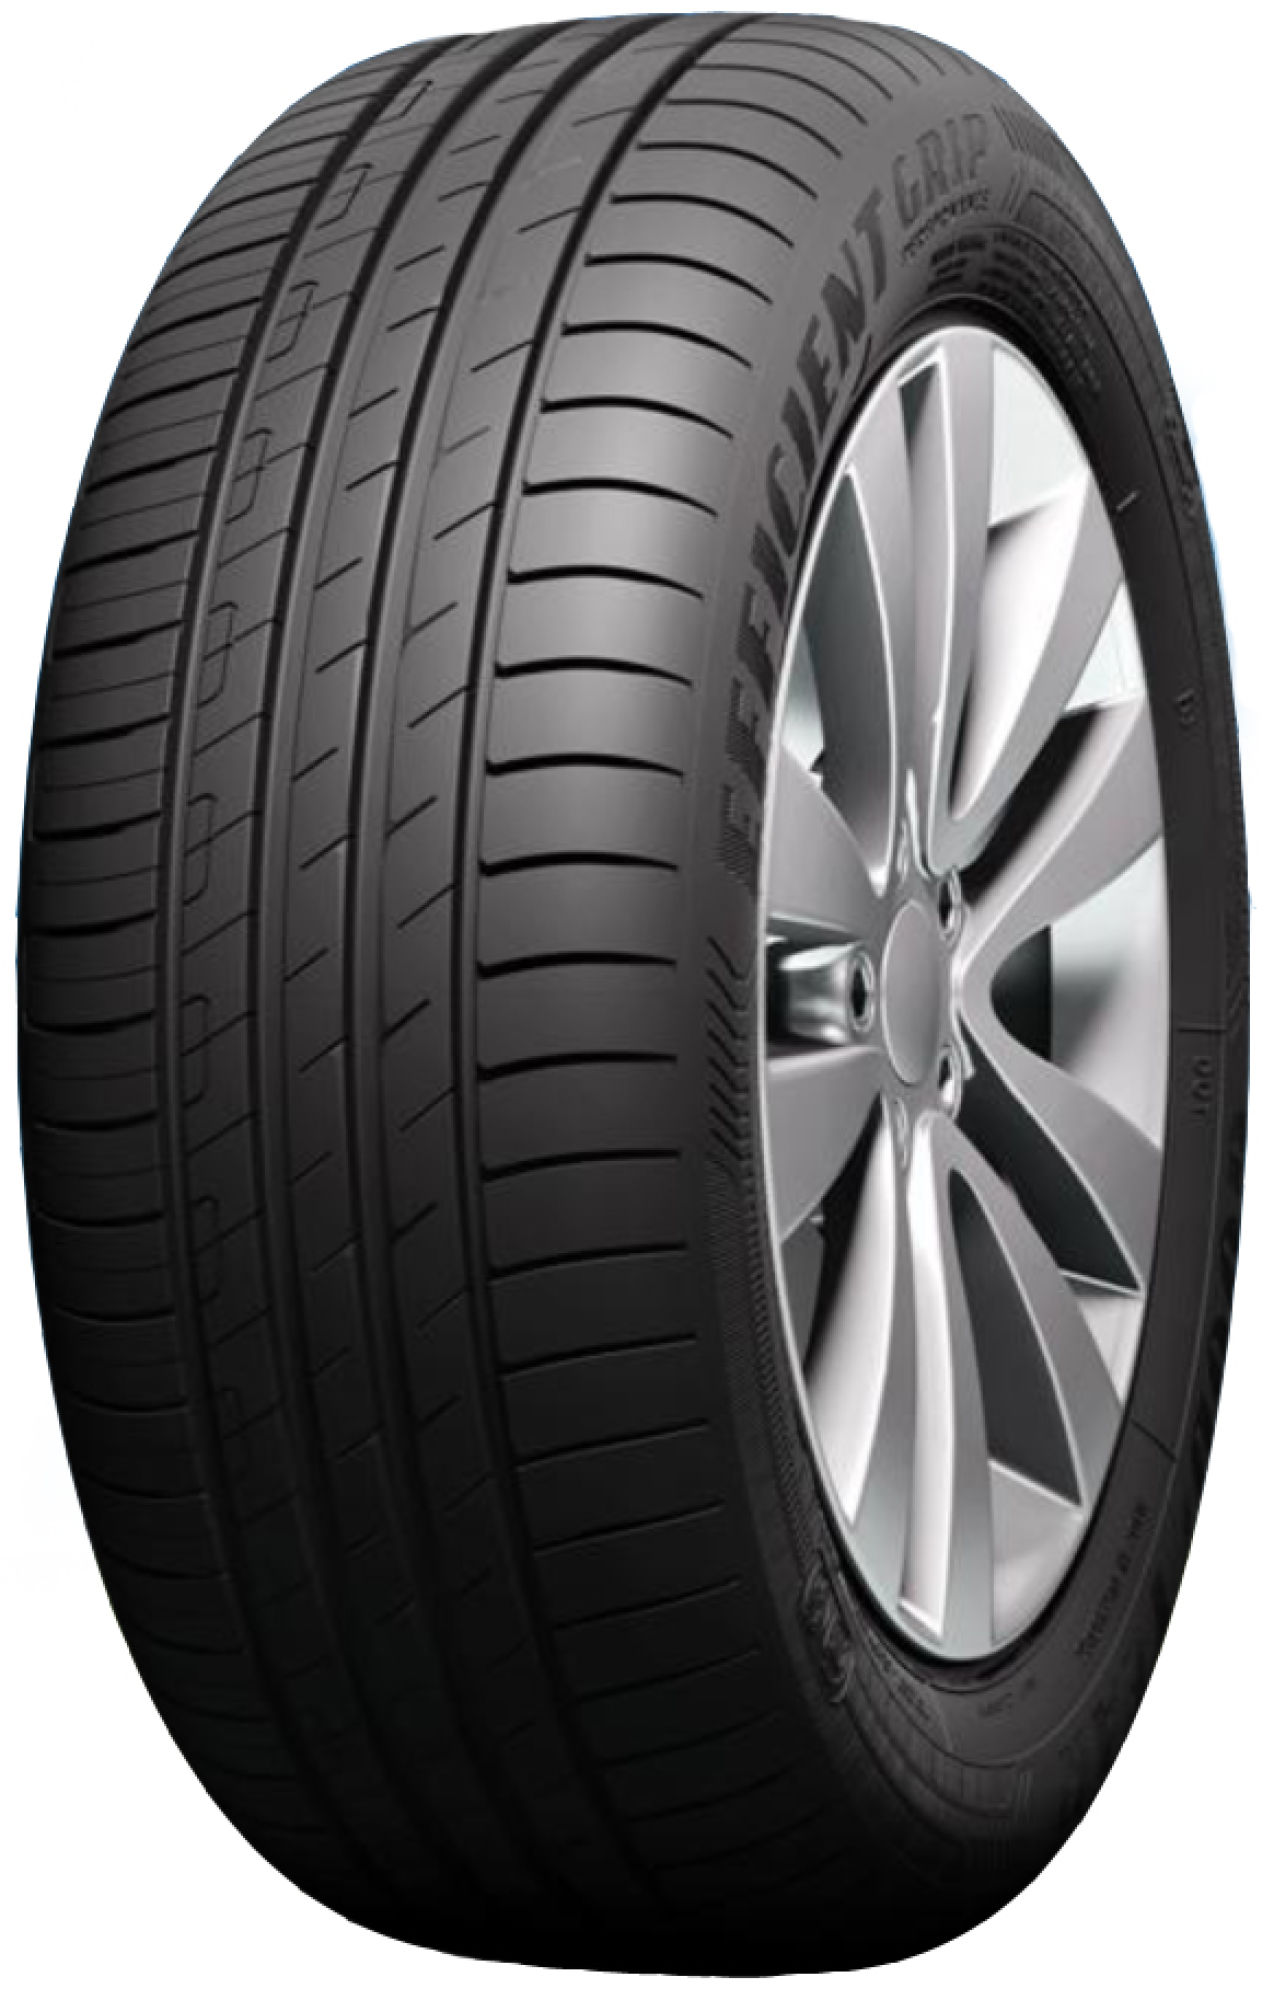 235/50R17 96W Goodyear EfficientGrip FP Summer Tire